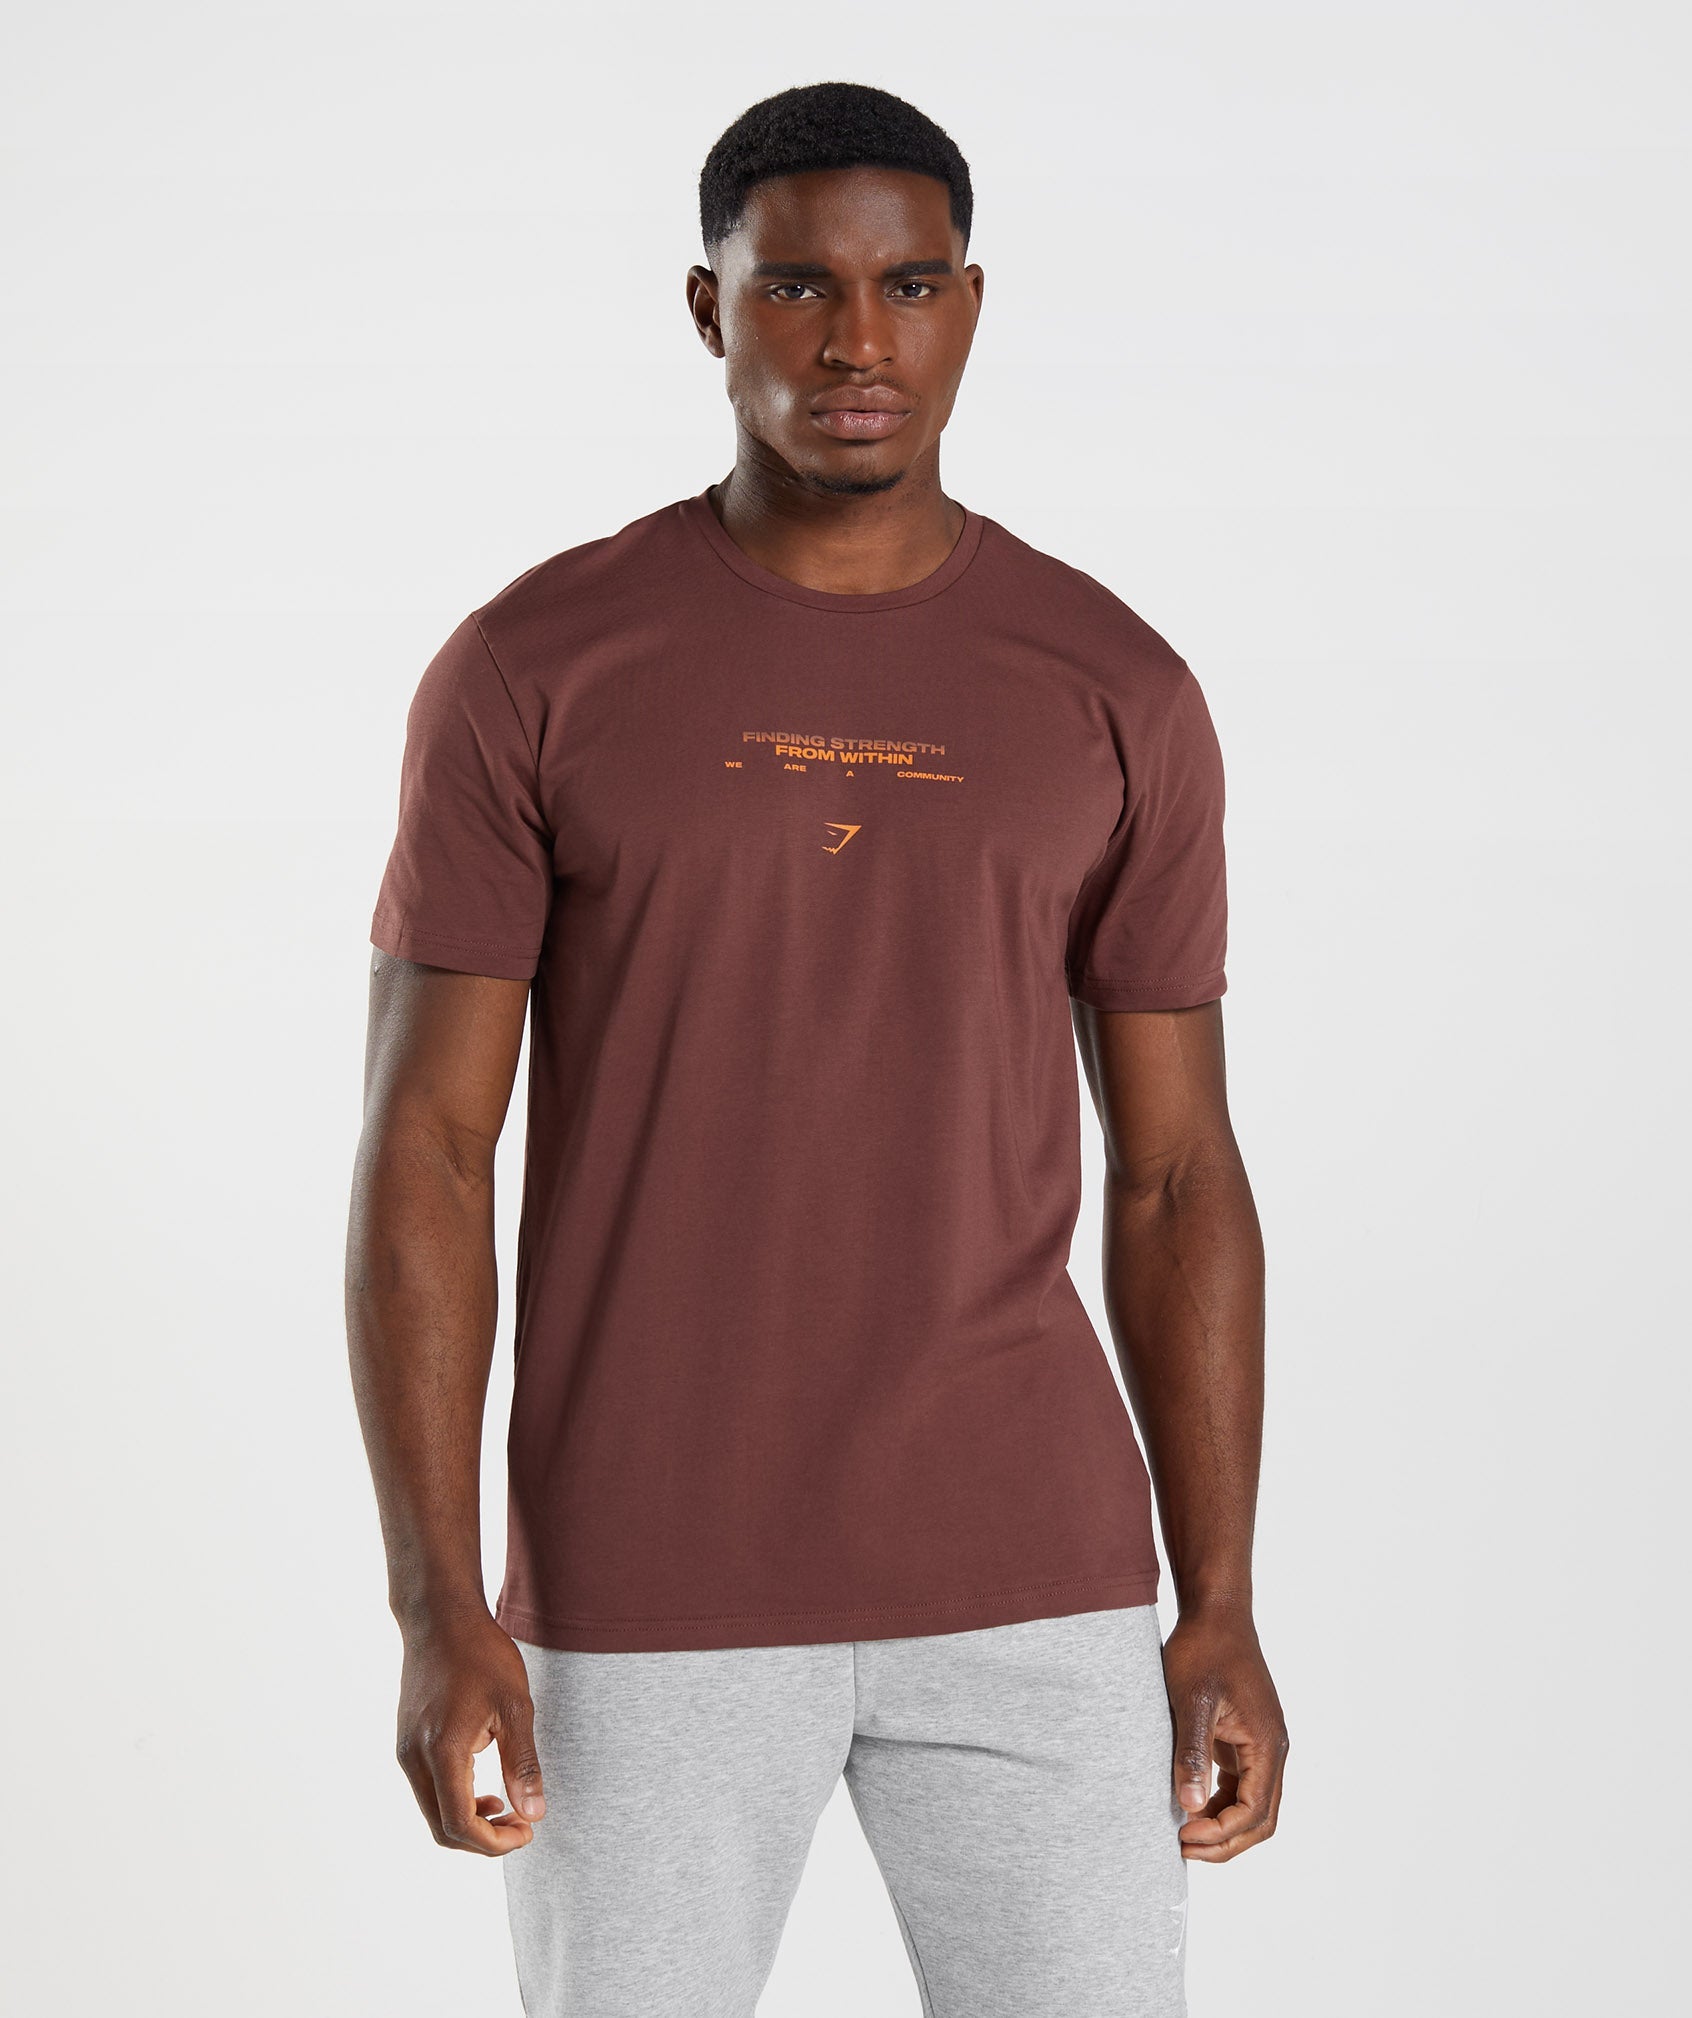 Hybrid Wellness T-Shirt in Cherry Brown - view 1